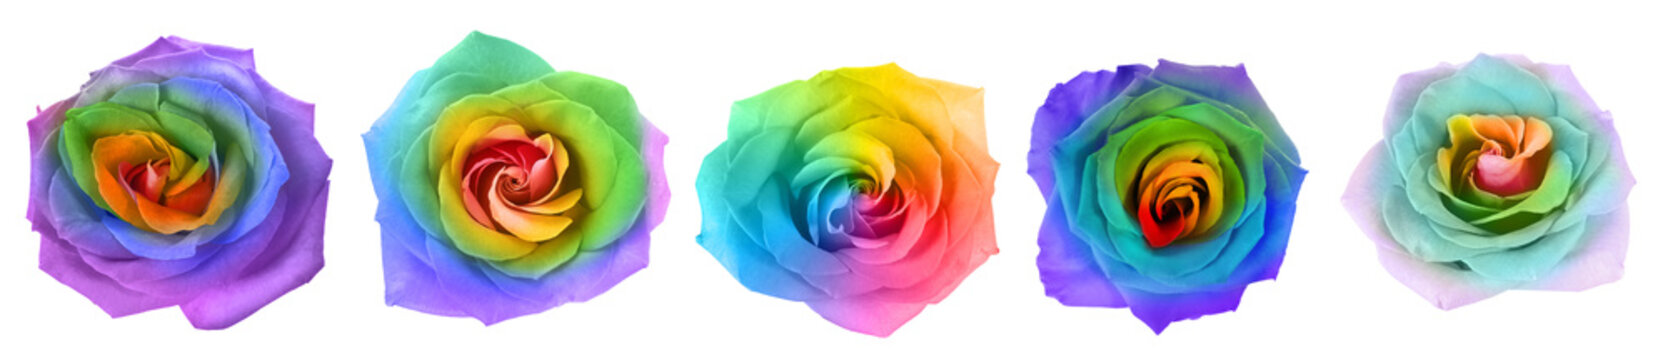 Beautiful rainbow rose flowers on white background